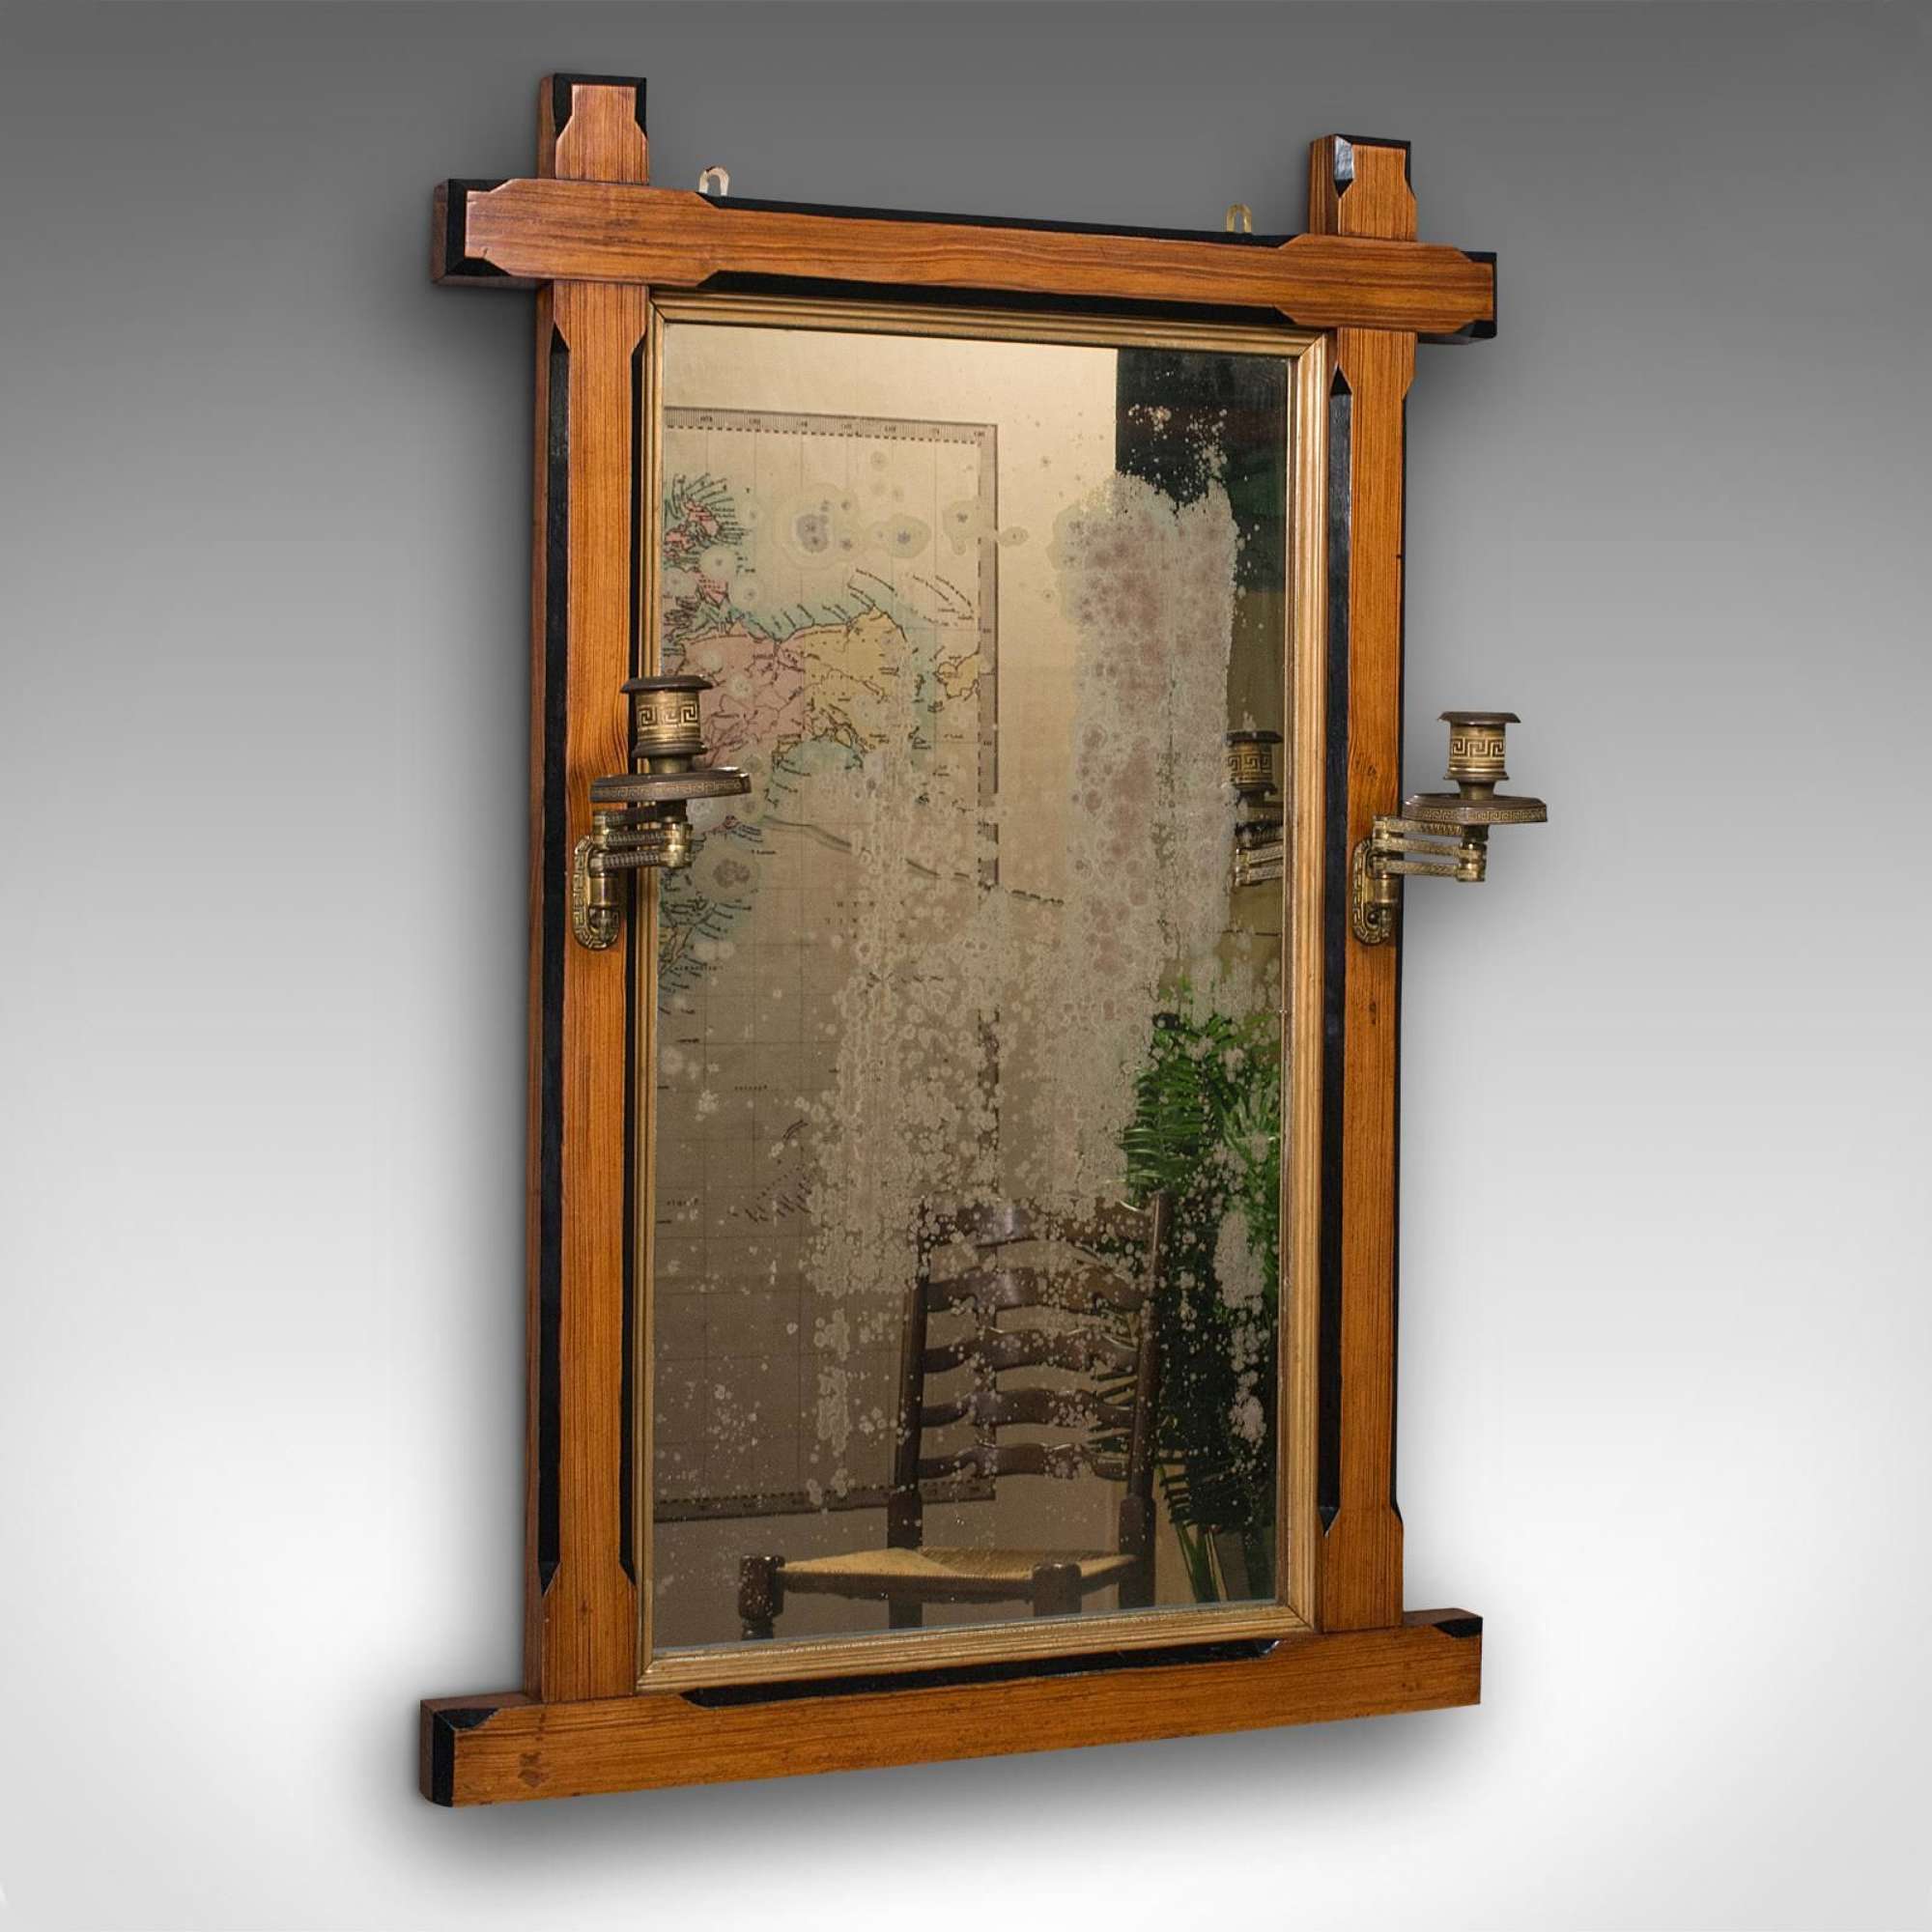 Antique Girandole Pier Mirror, English, Pitch Pine, Aesthetic Period, Victorian